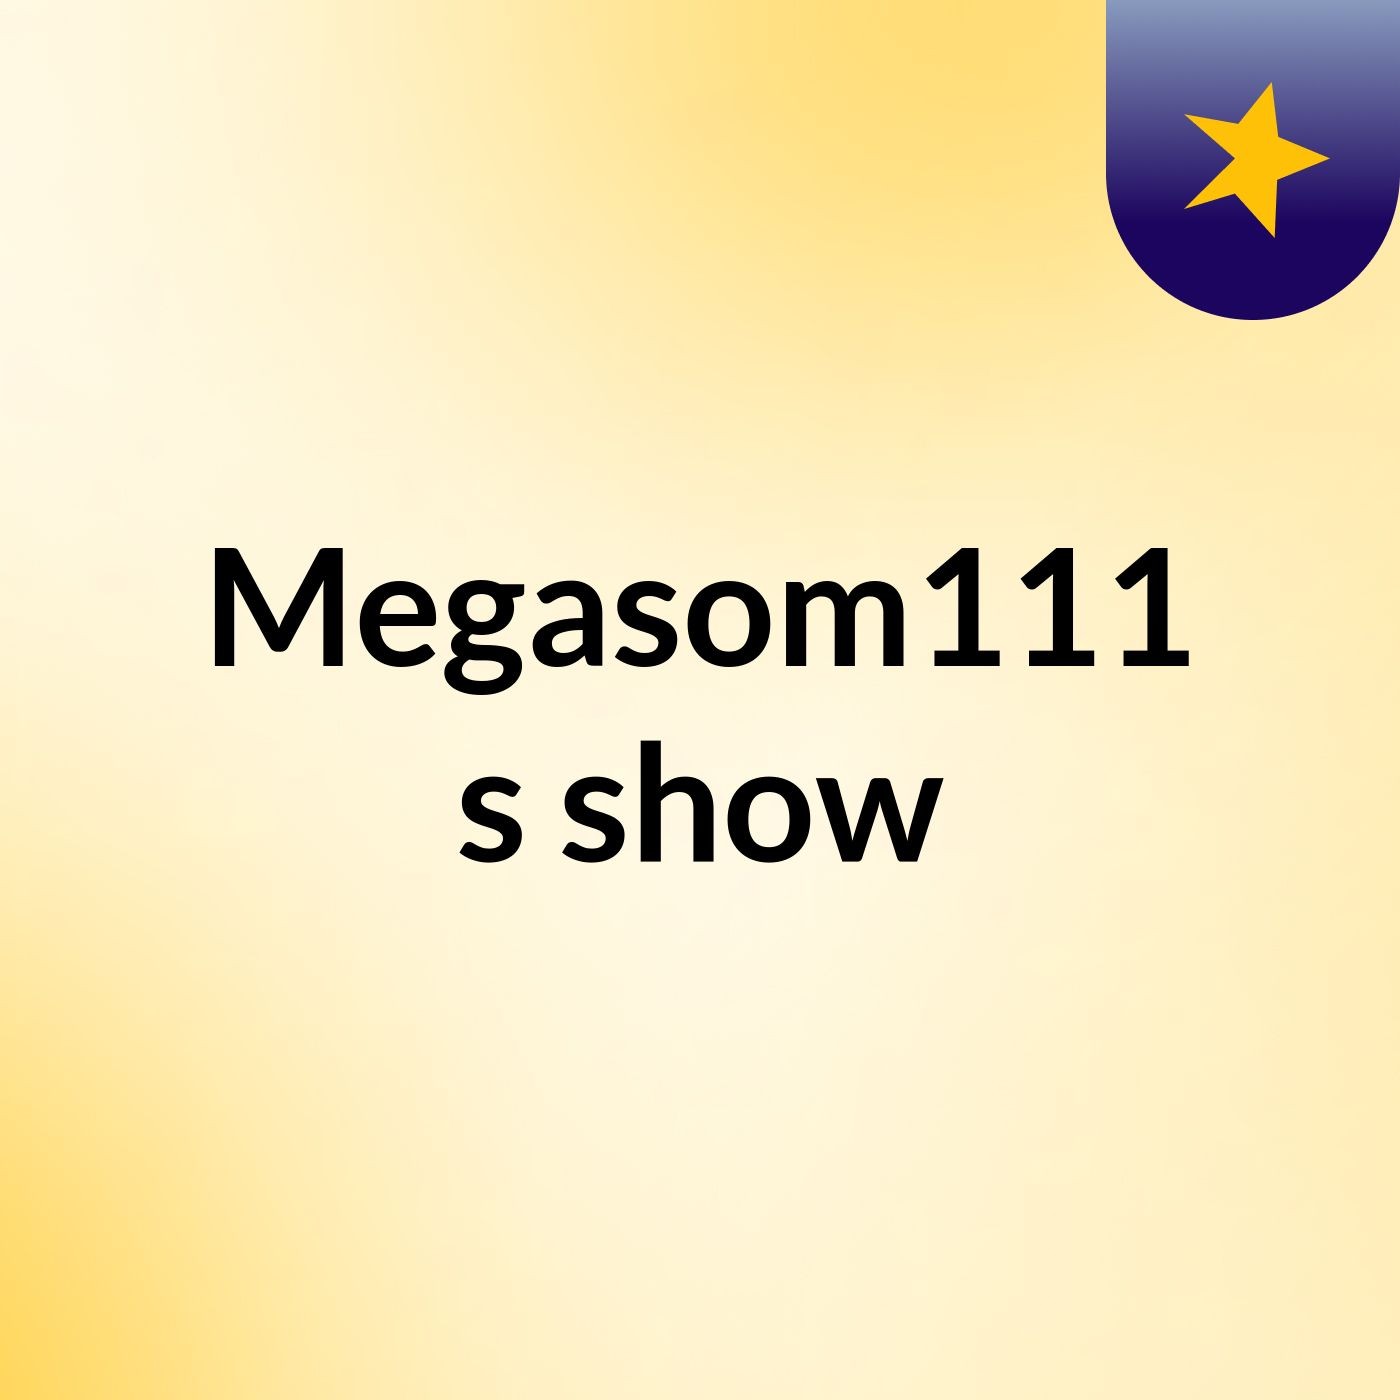 Megasom111's show